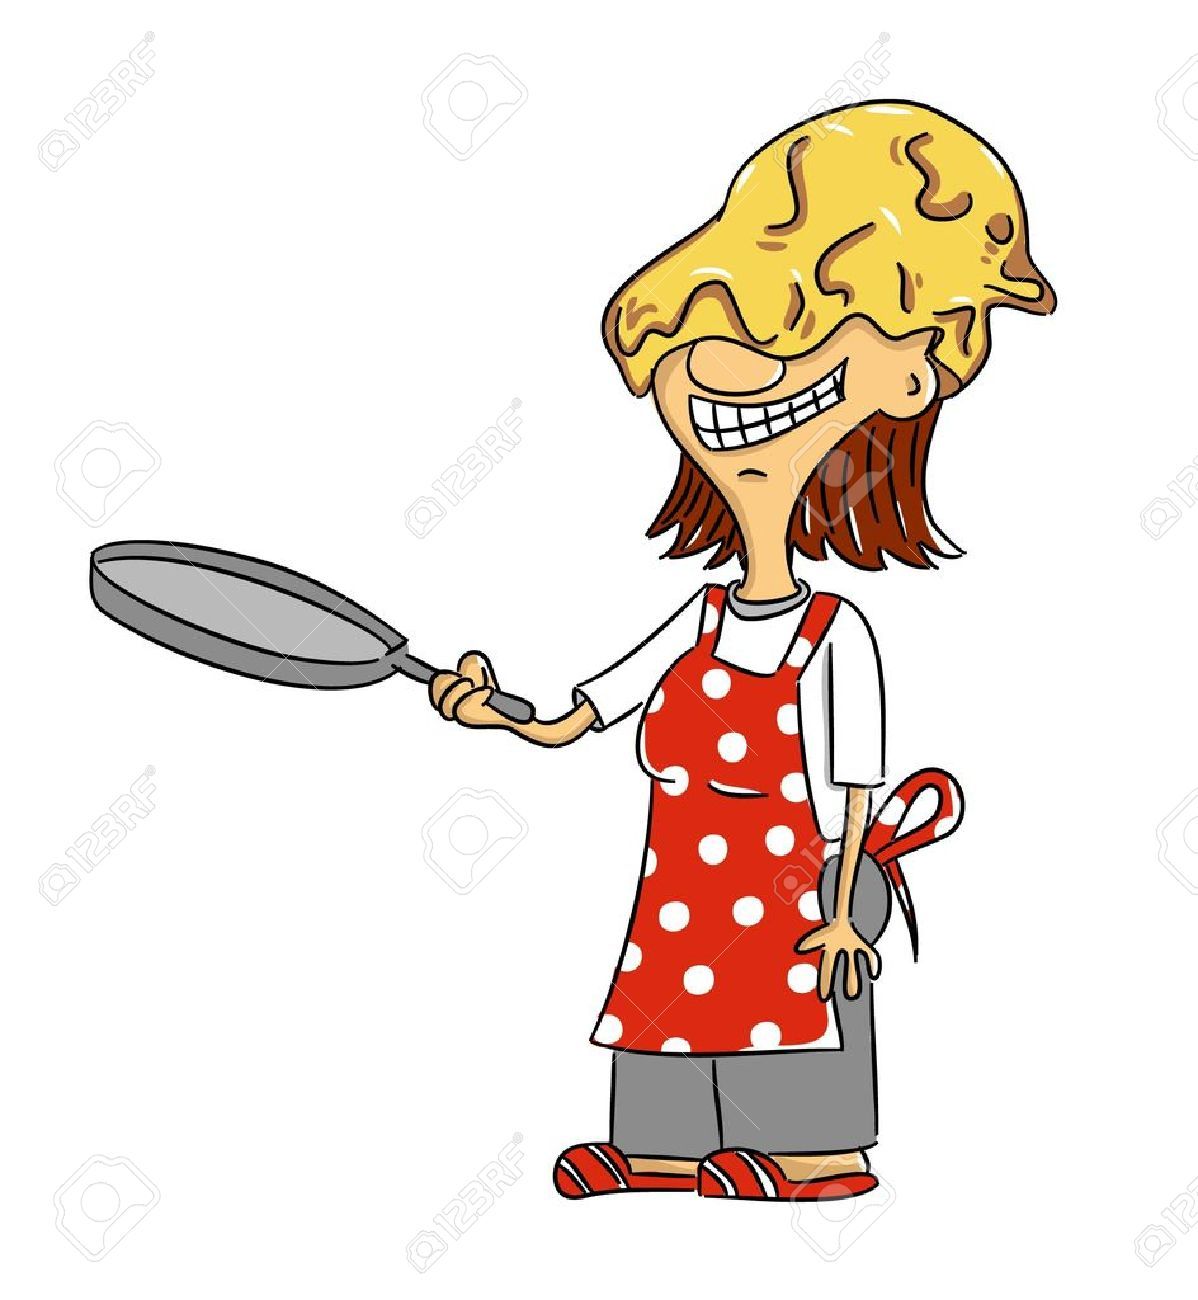 pancake-chef-clipart-22.jpg